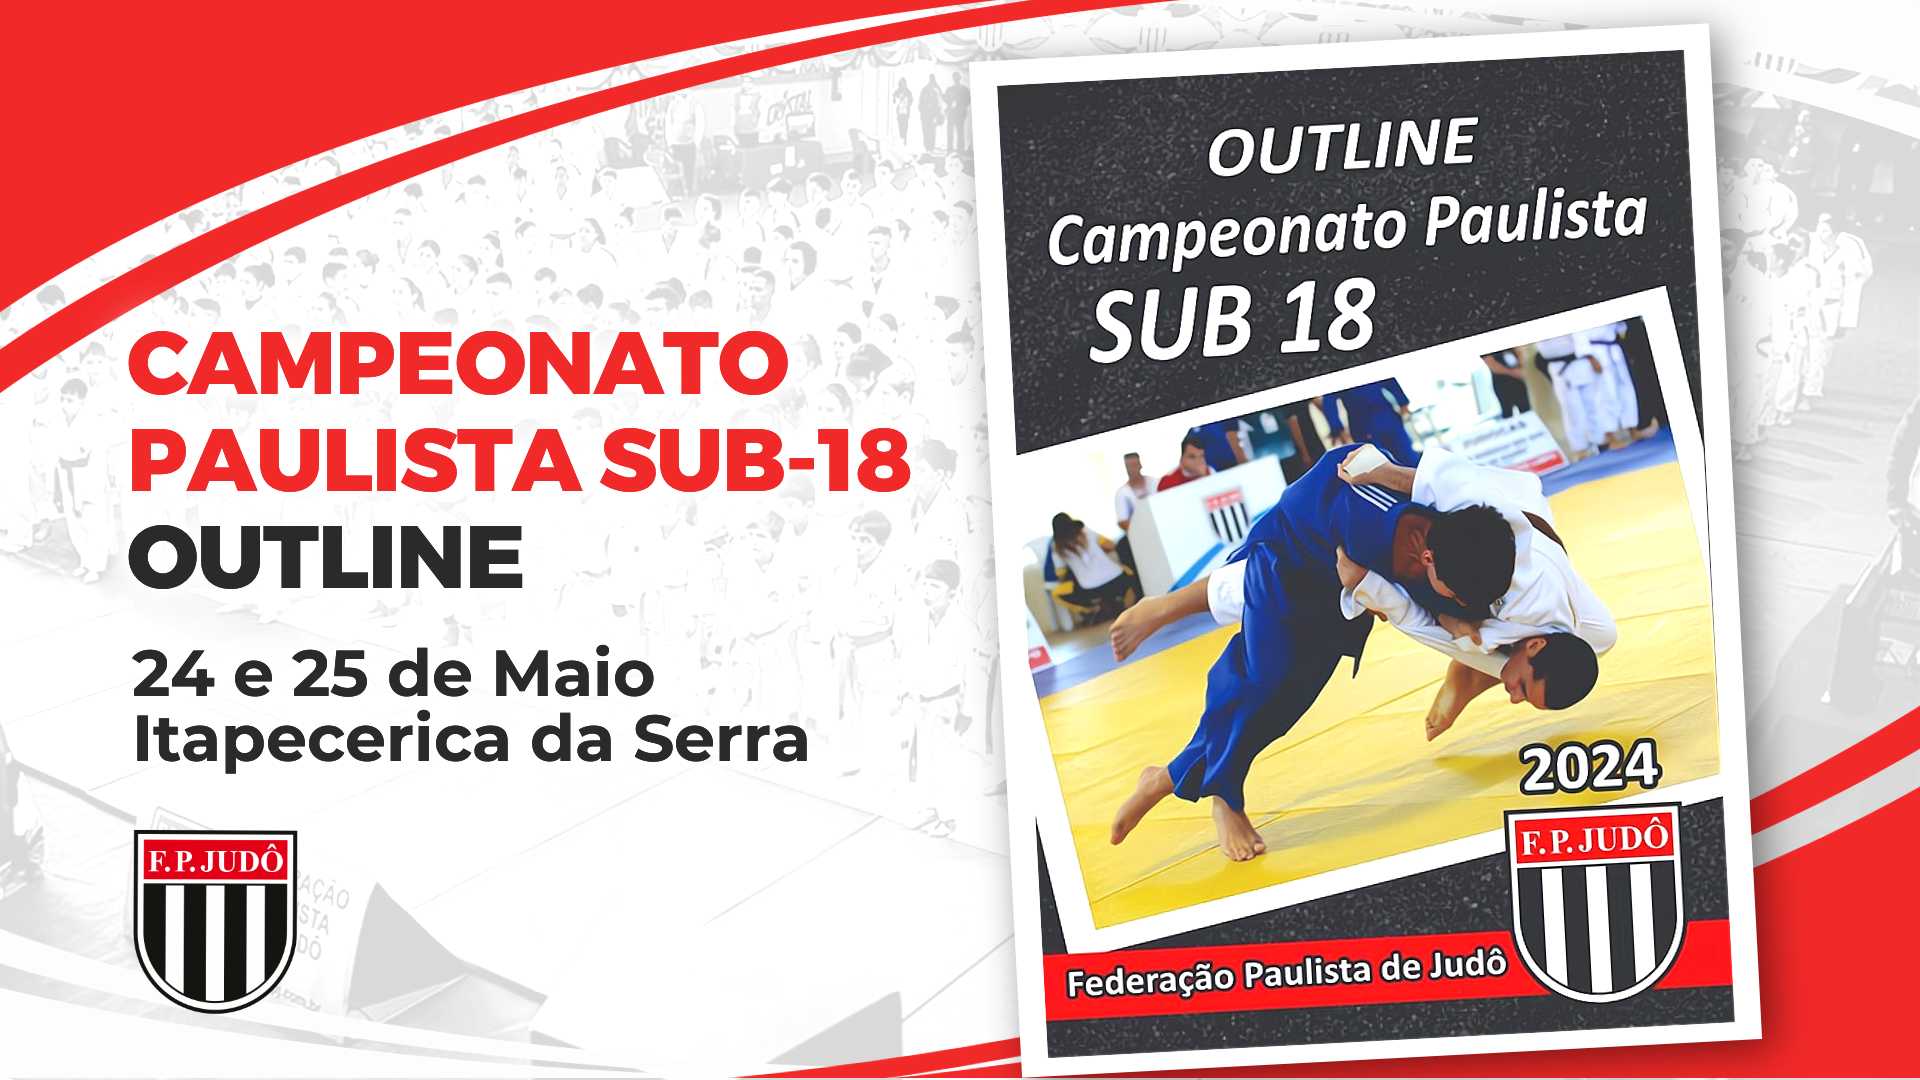 Outline Campeonato Paulista Sub-18 2024